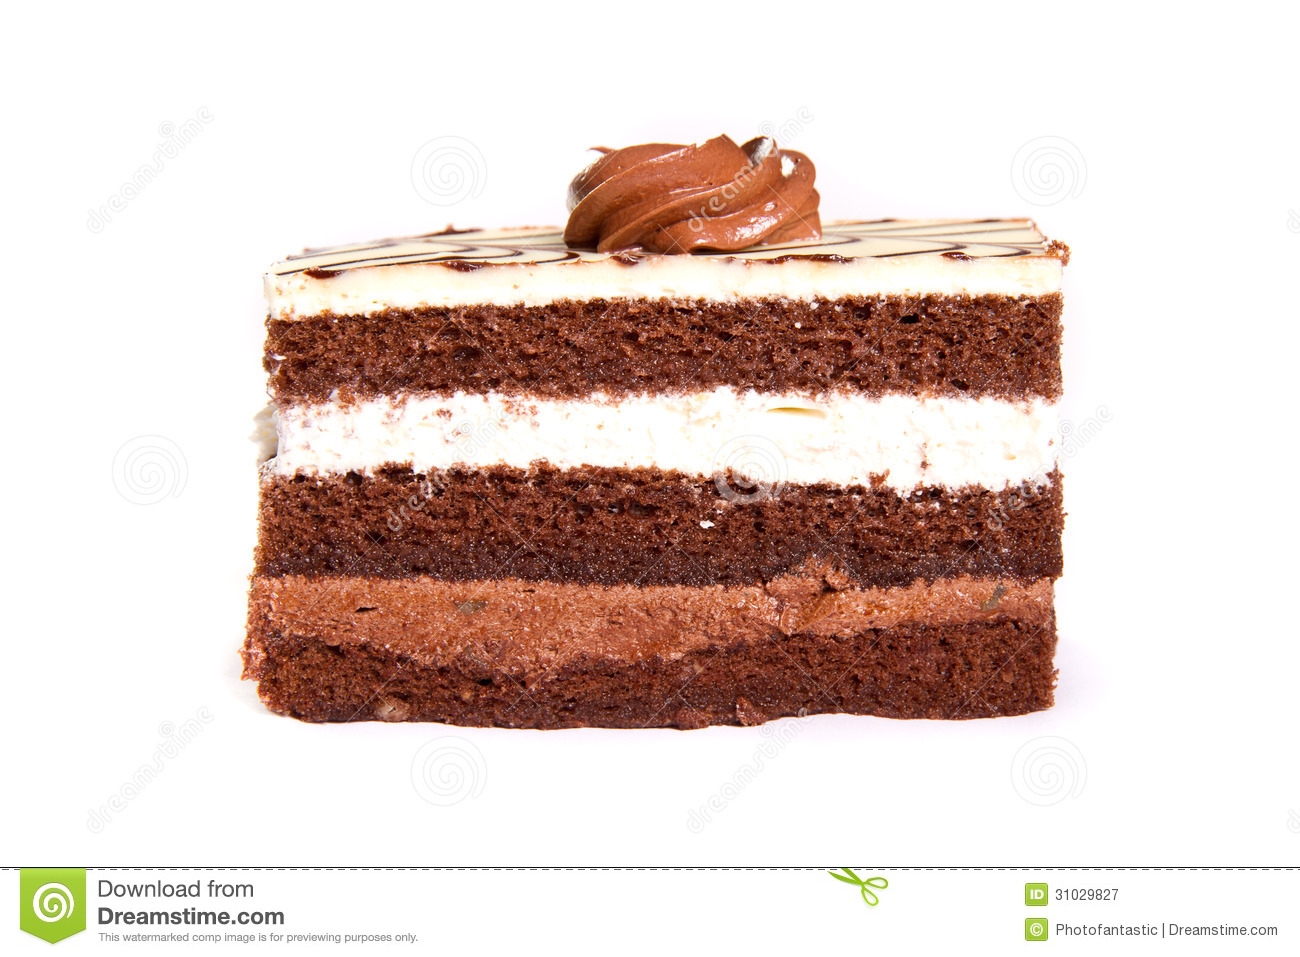 Chocolate Cake Royalty Free Stock Photography   Image  31029827